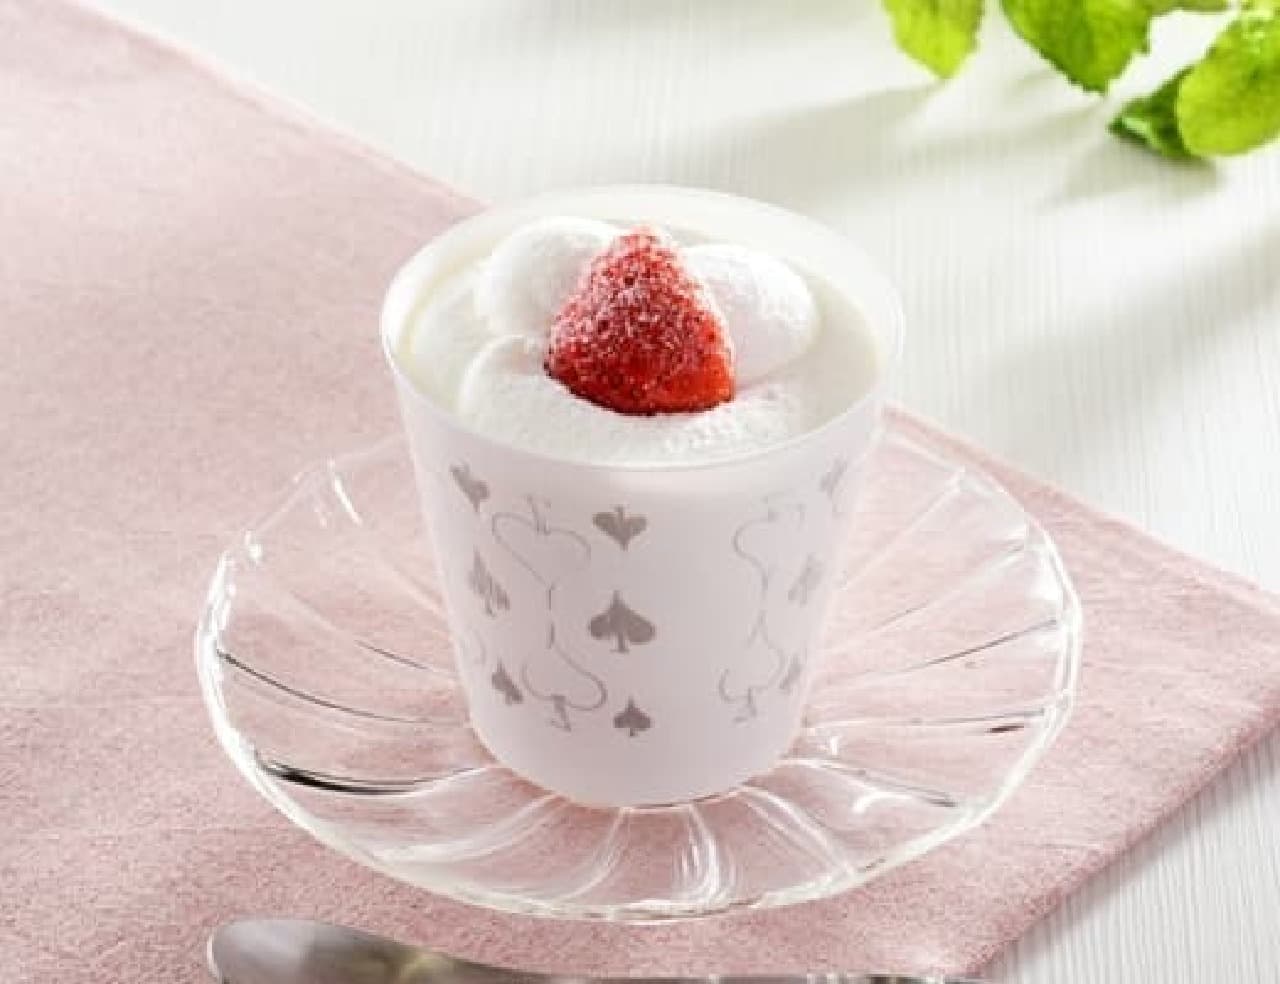 Lawson "CUPKE Melting Cream Strawberry Short"